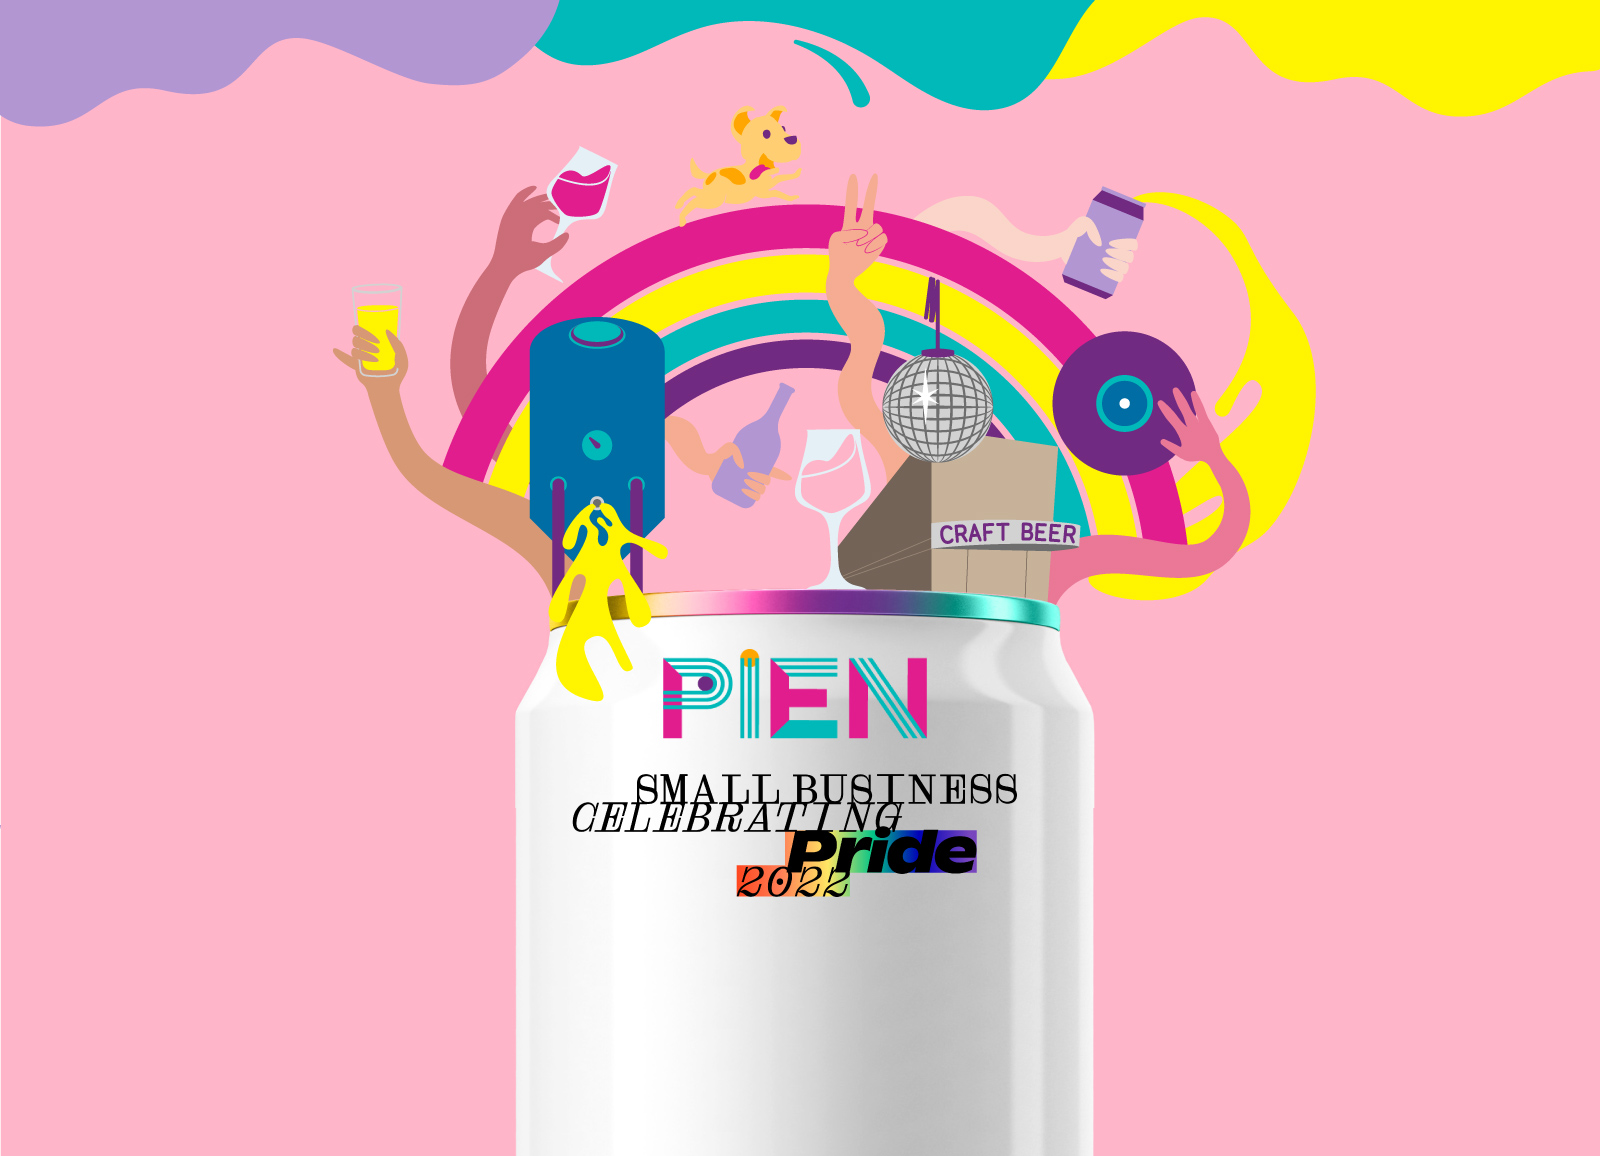 Pien supports Helsinki Pride 2022